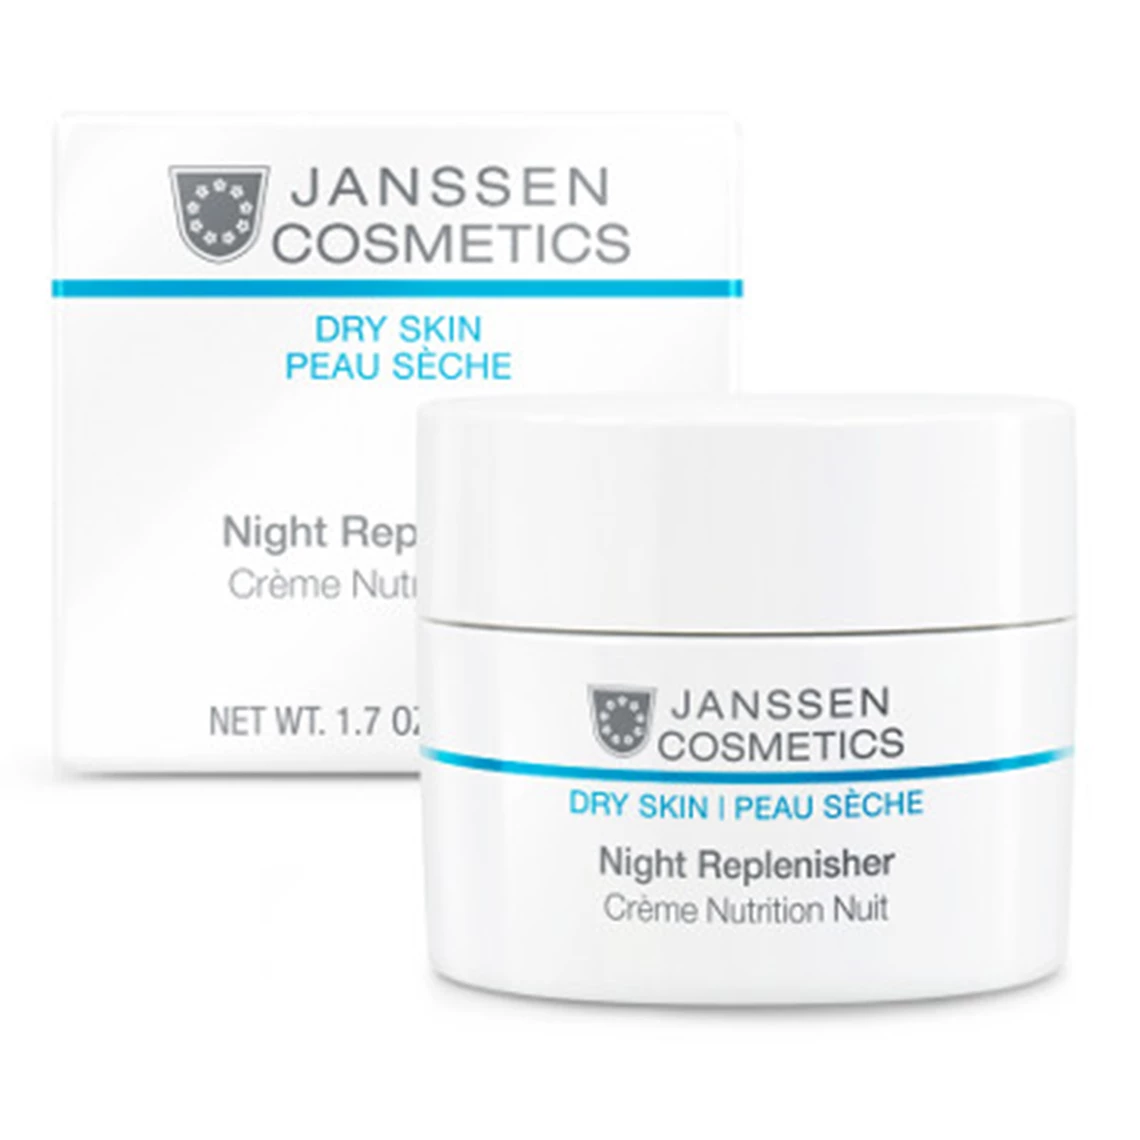 Night Replenisher by Janssen Cosmetics